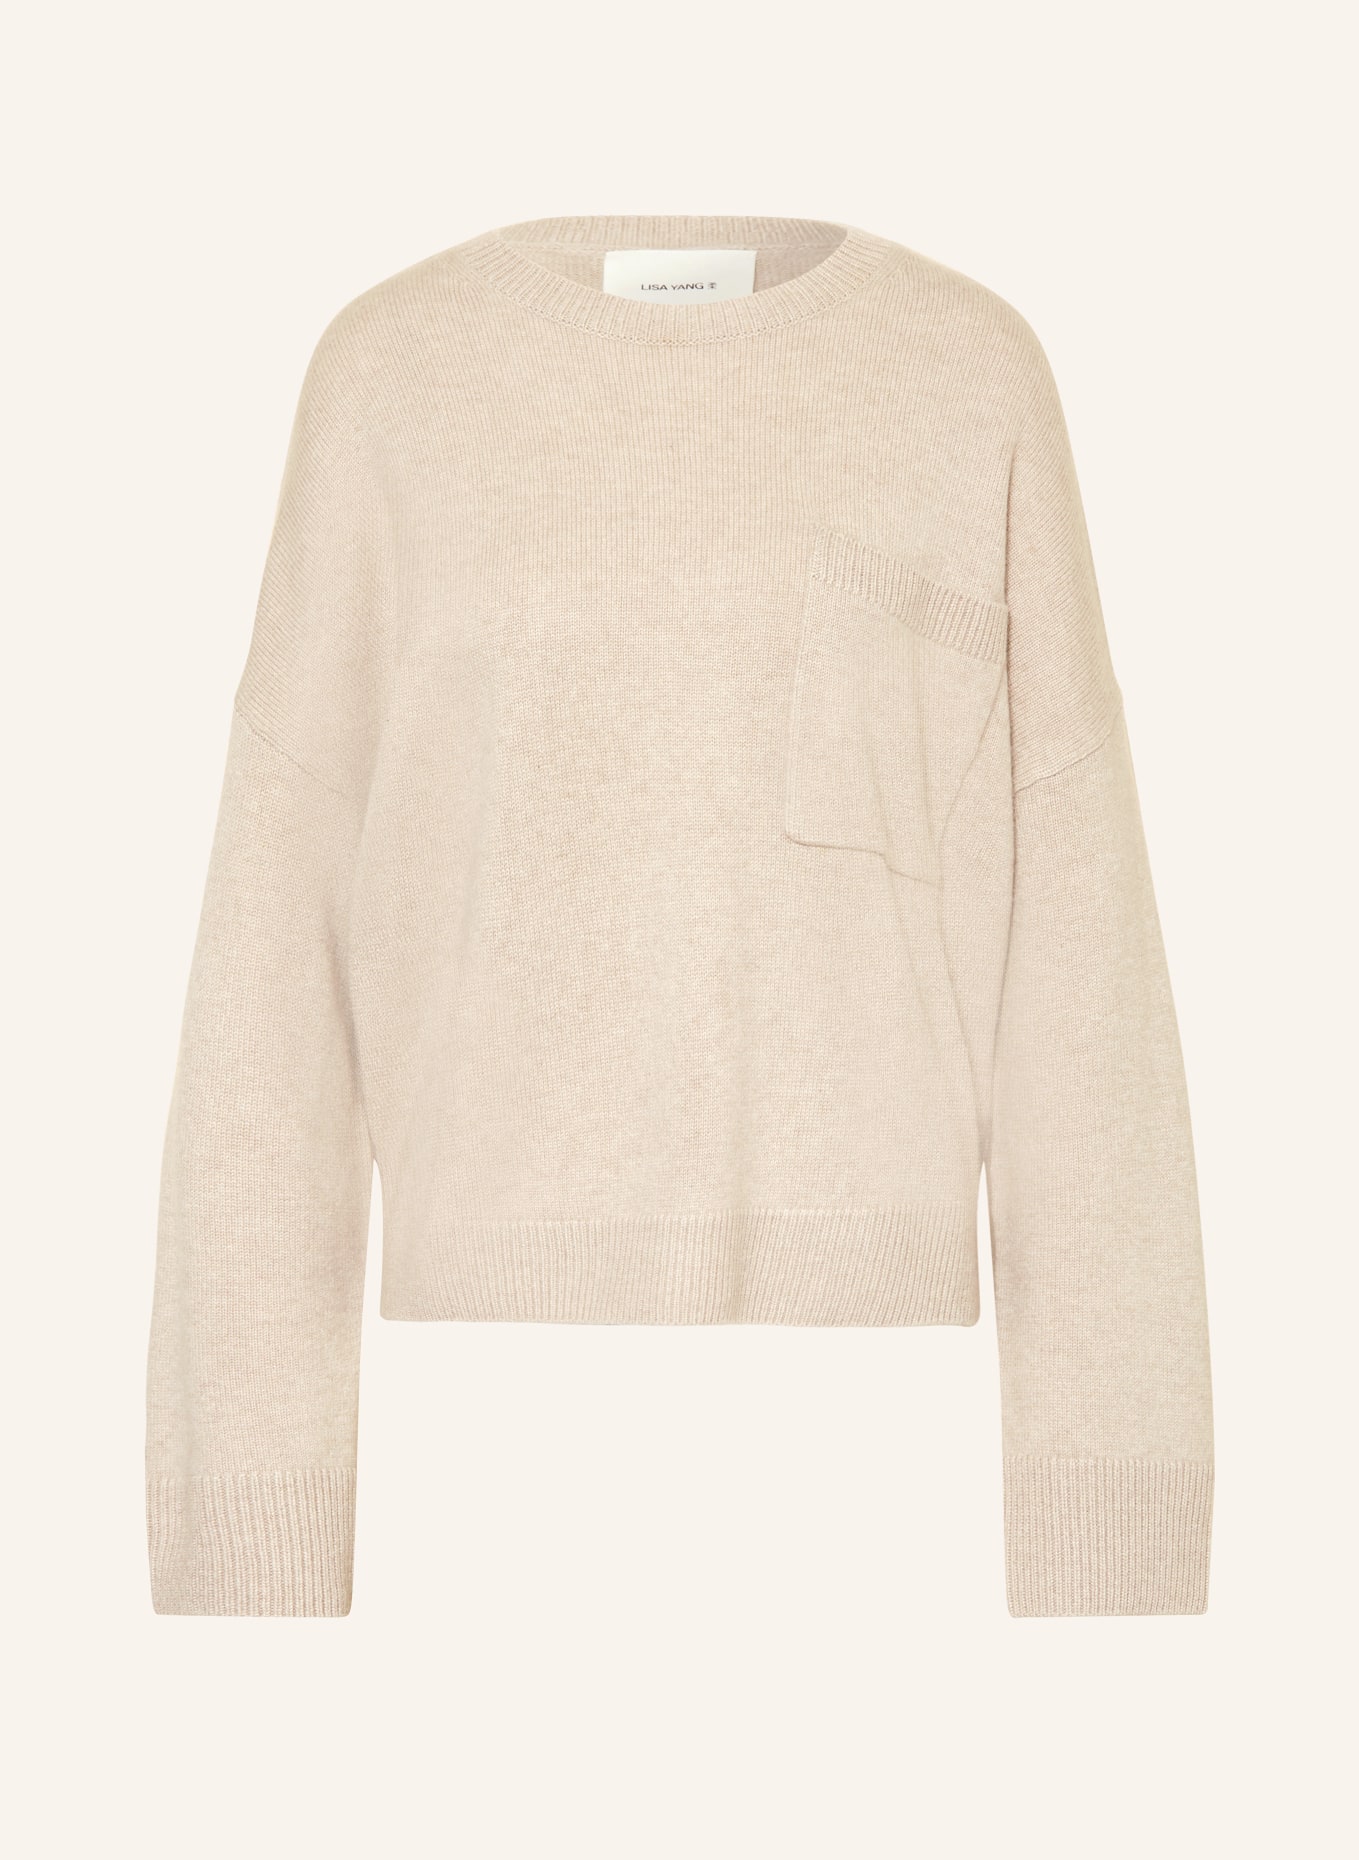 LISA YANG Cashmere sweater, Color: LIGHT BROWN (Image 1)